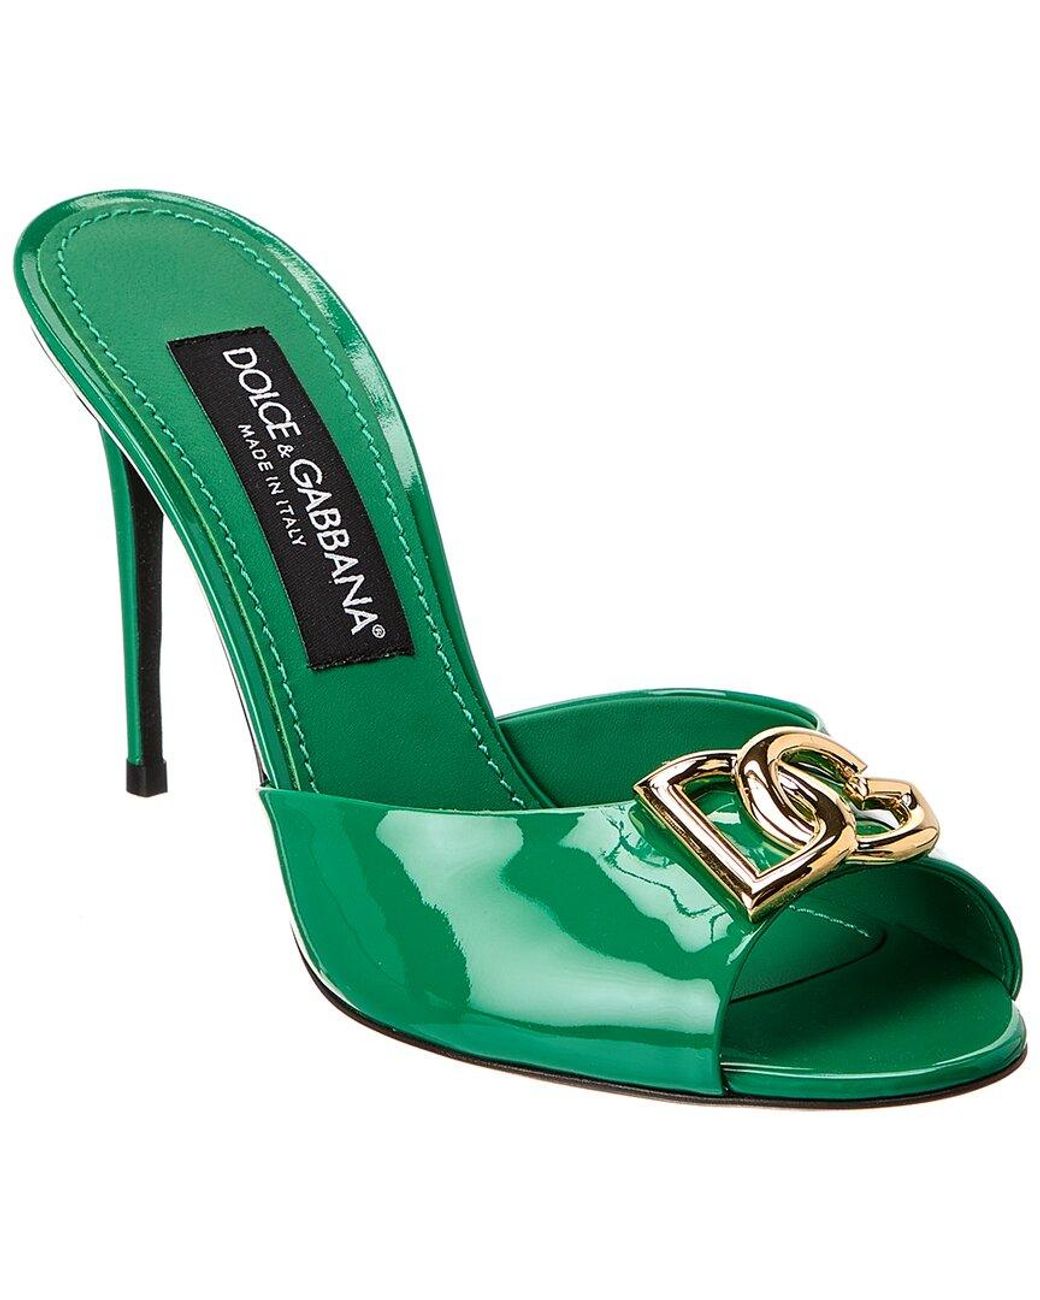 Dolce & Gabbana Dg Logo Patent Sandal in Green | Lyst